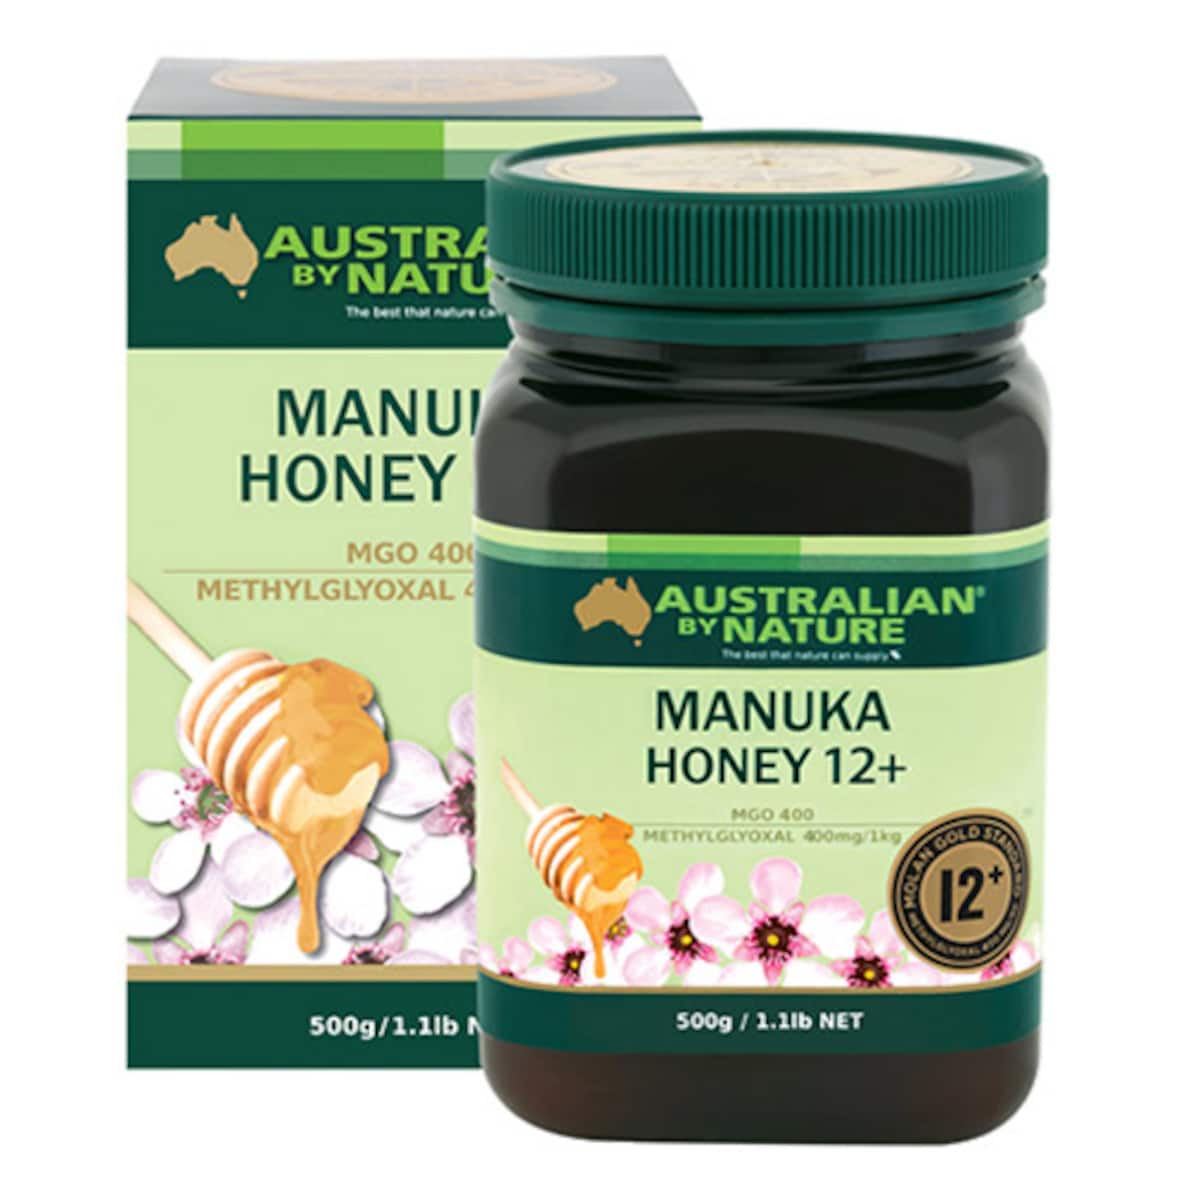 Australian by Nature Manuka Honey 12+ (MGO 400) 500g